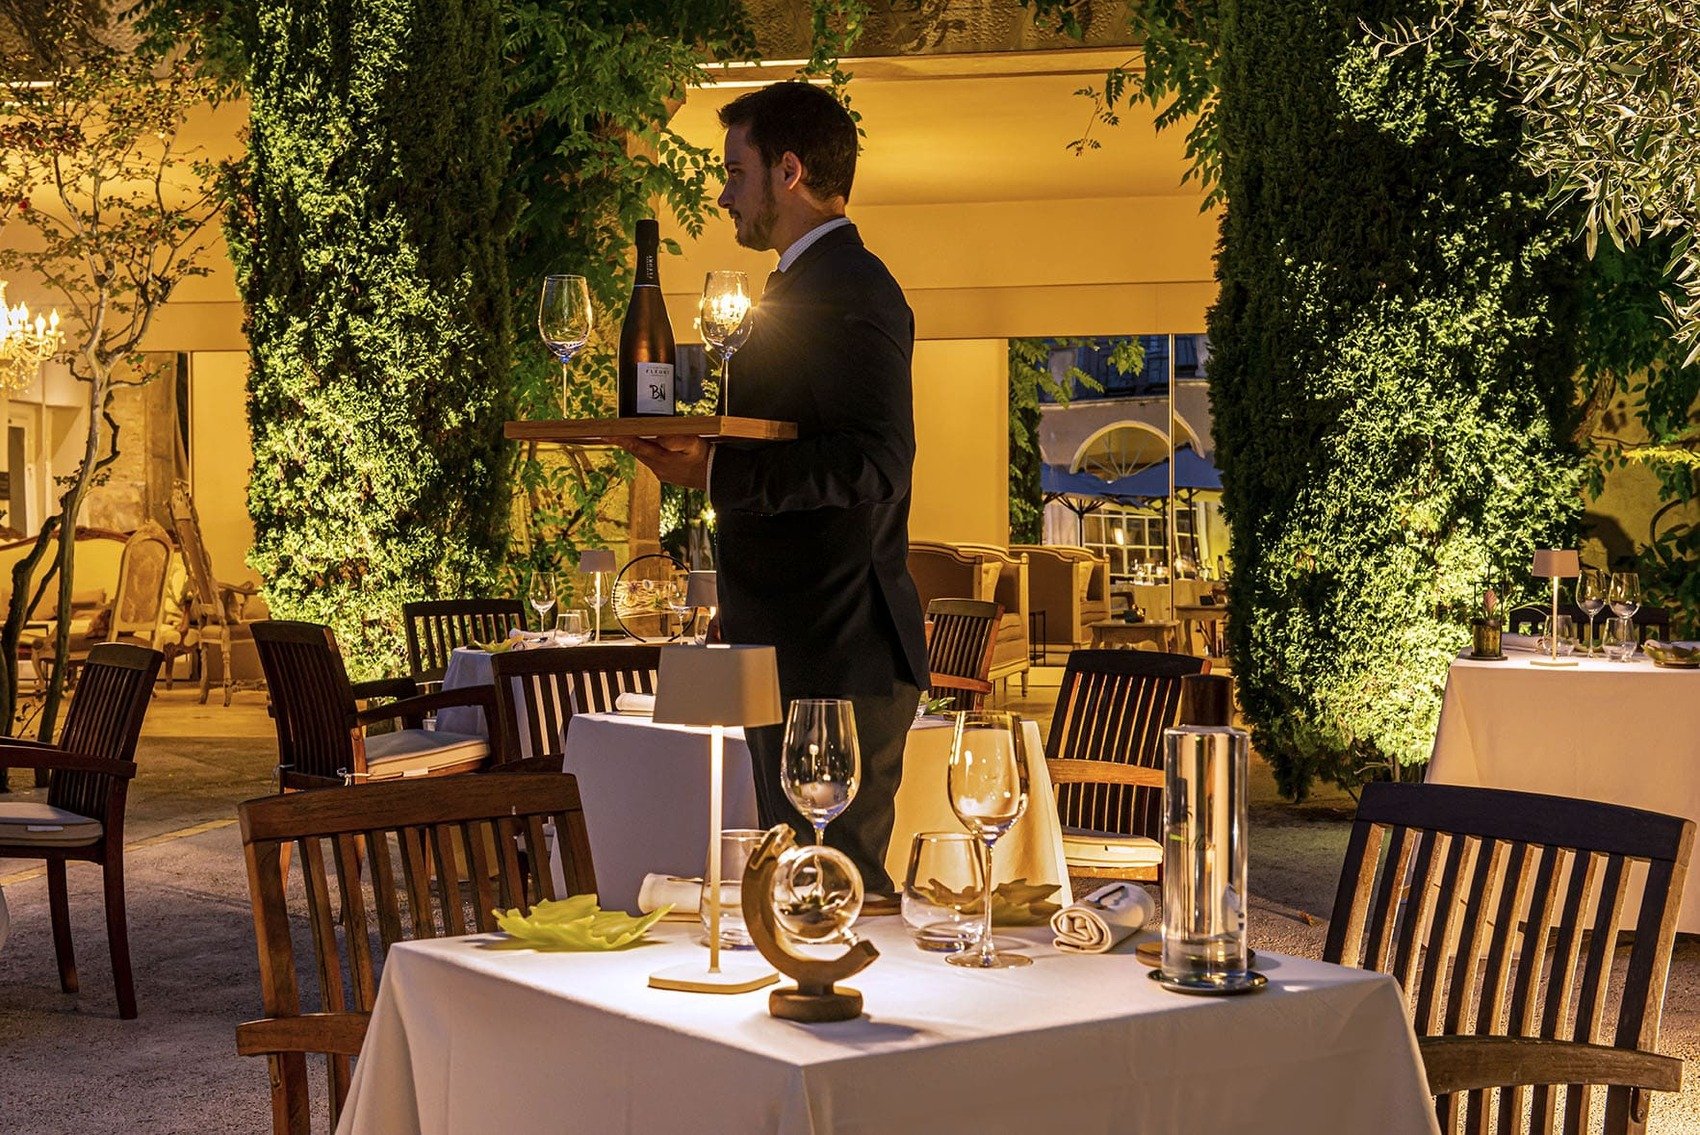 Luxury hotel in Provence, France - Château de Massillan 5* - Chef Mickael Furnion - Michelin-starred restaurant Le M - restaurant